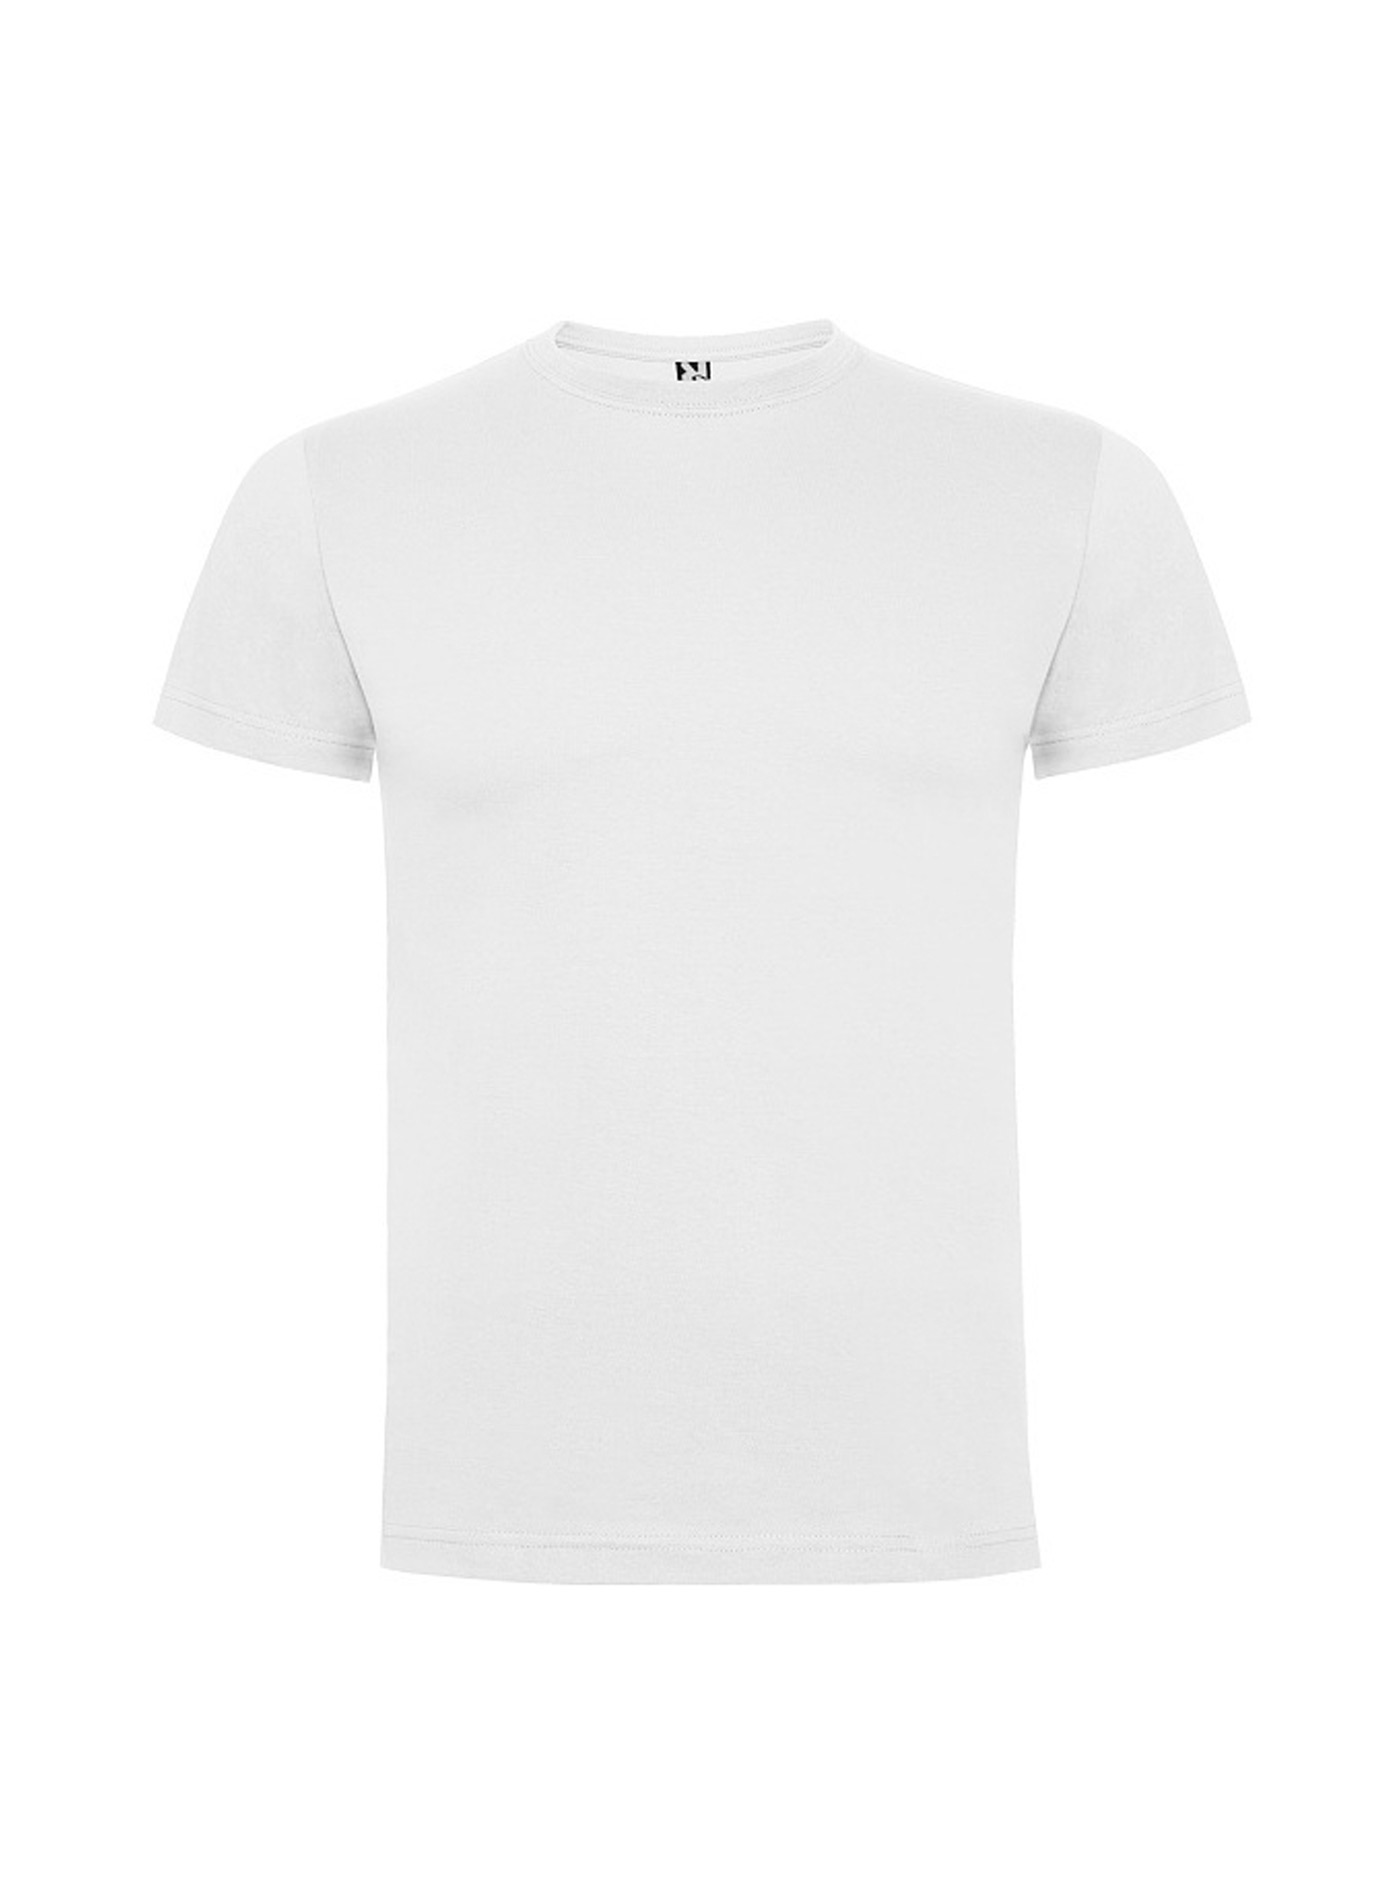 Dětské tričko Roly Dogo premium - Bílá 5-6